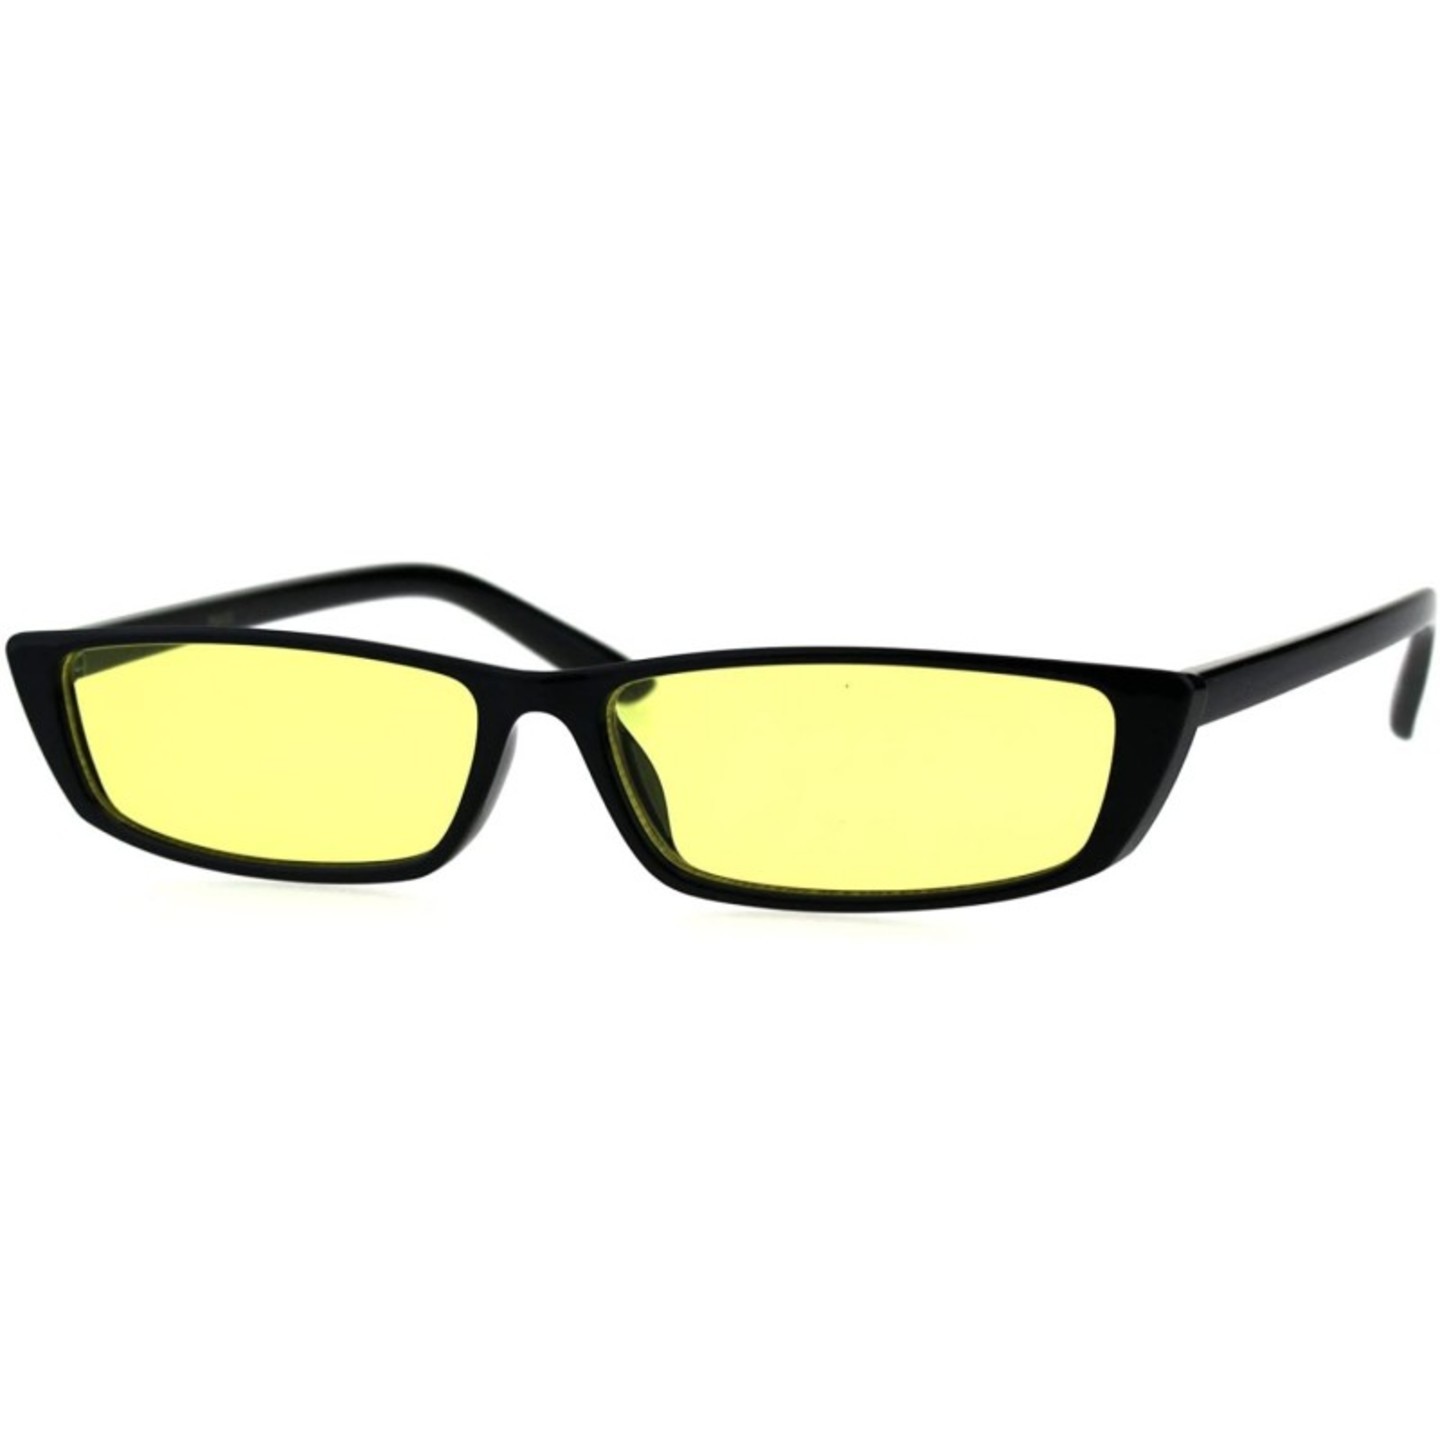 Black Full Rim Yellow Colored Sunglasses